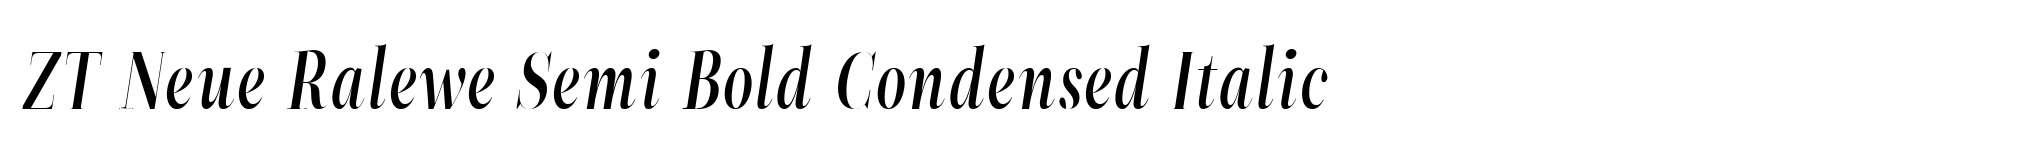 ZT Neue Ralewe Semi Bold Condensed Italic image